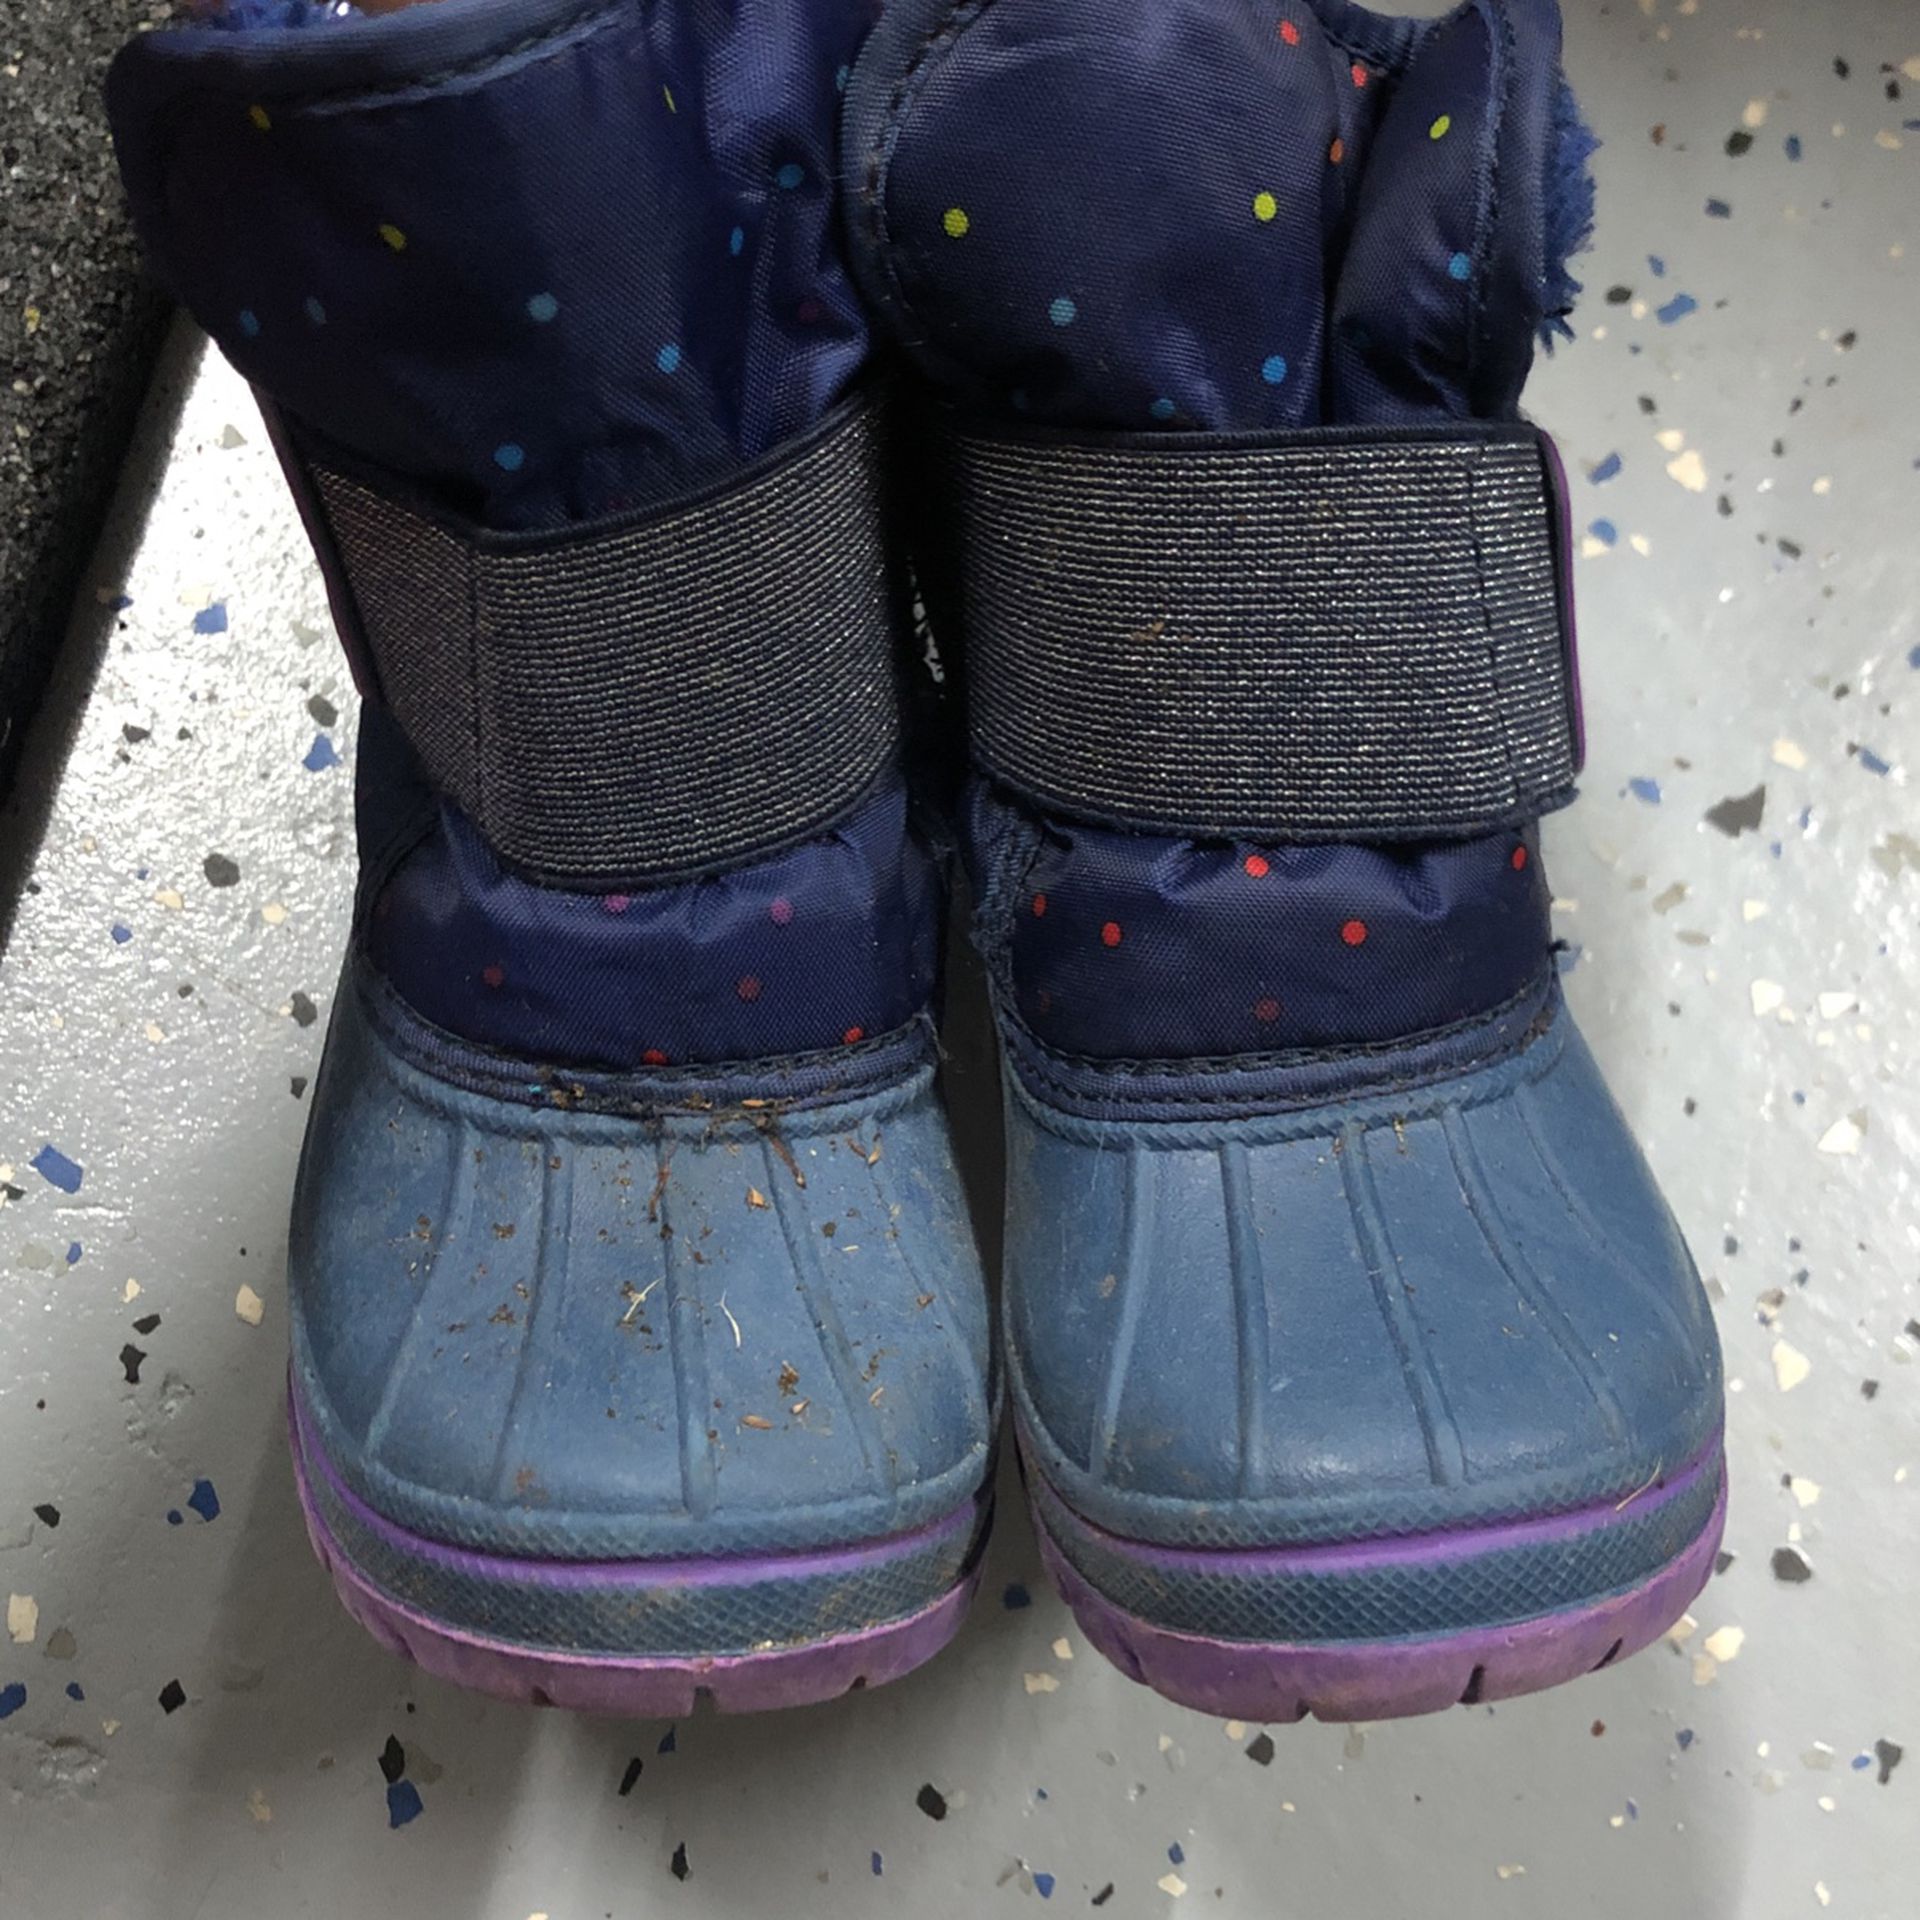 Free Kids Warm Winter Boots - Size 5